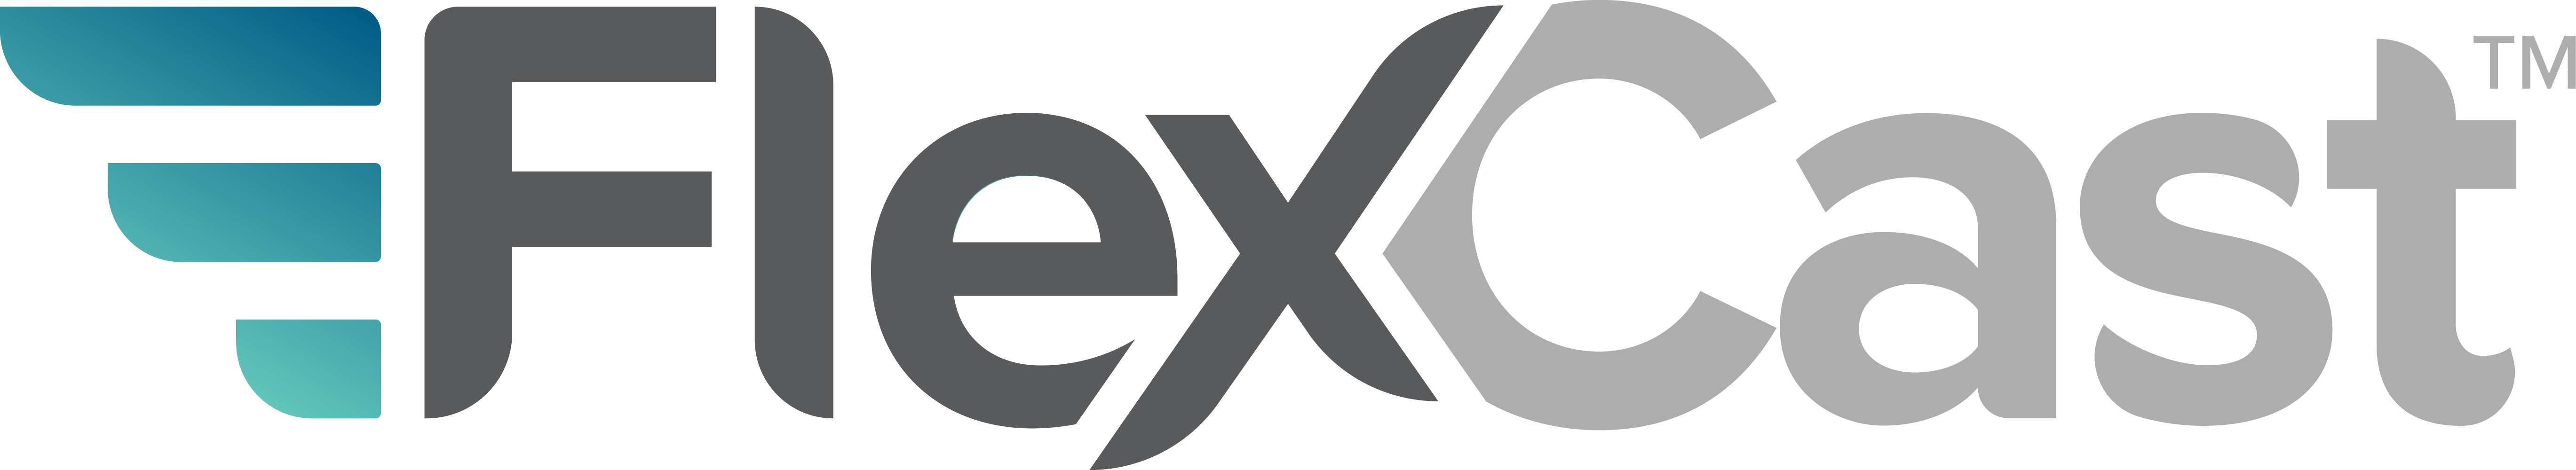 Flexcast_logo